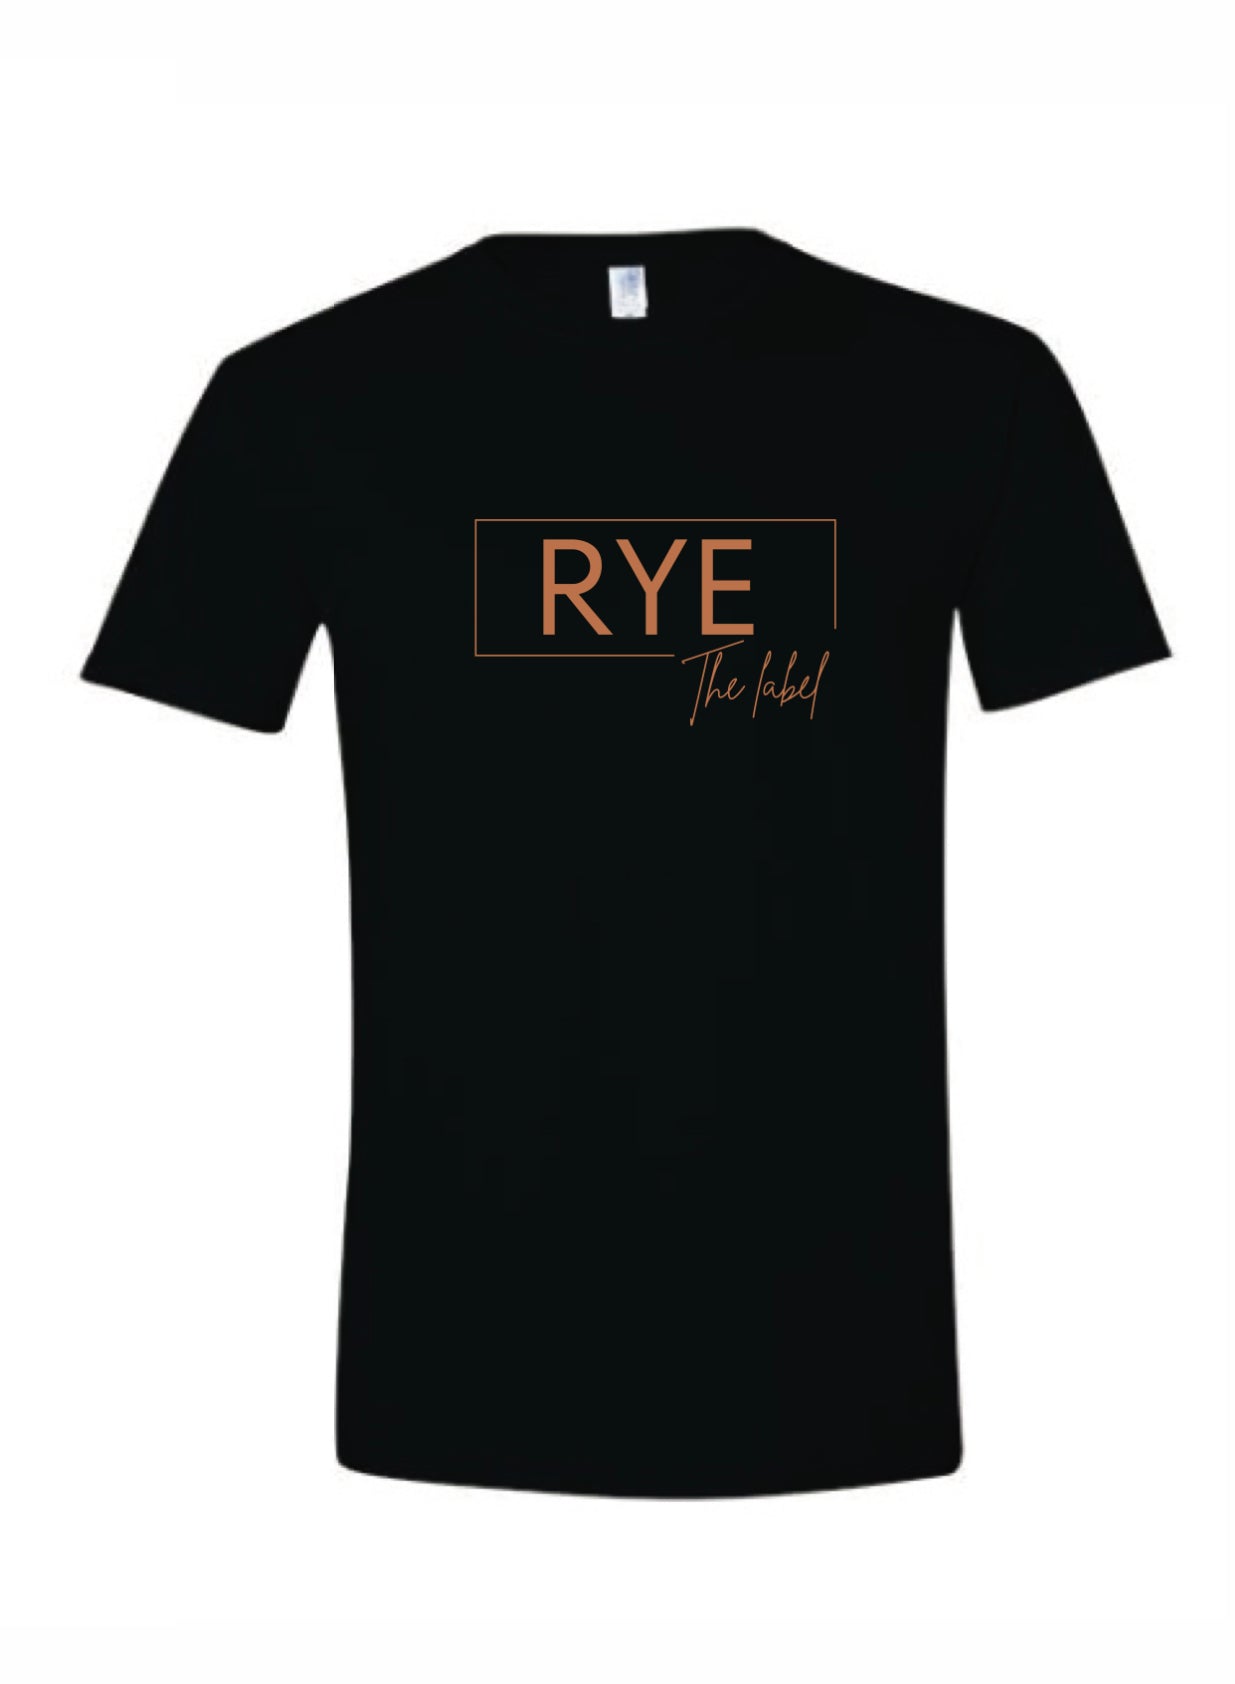 RYE T-Shirt (brand logo)